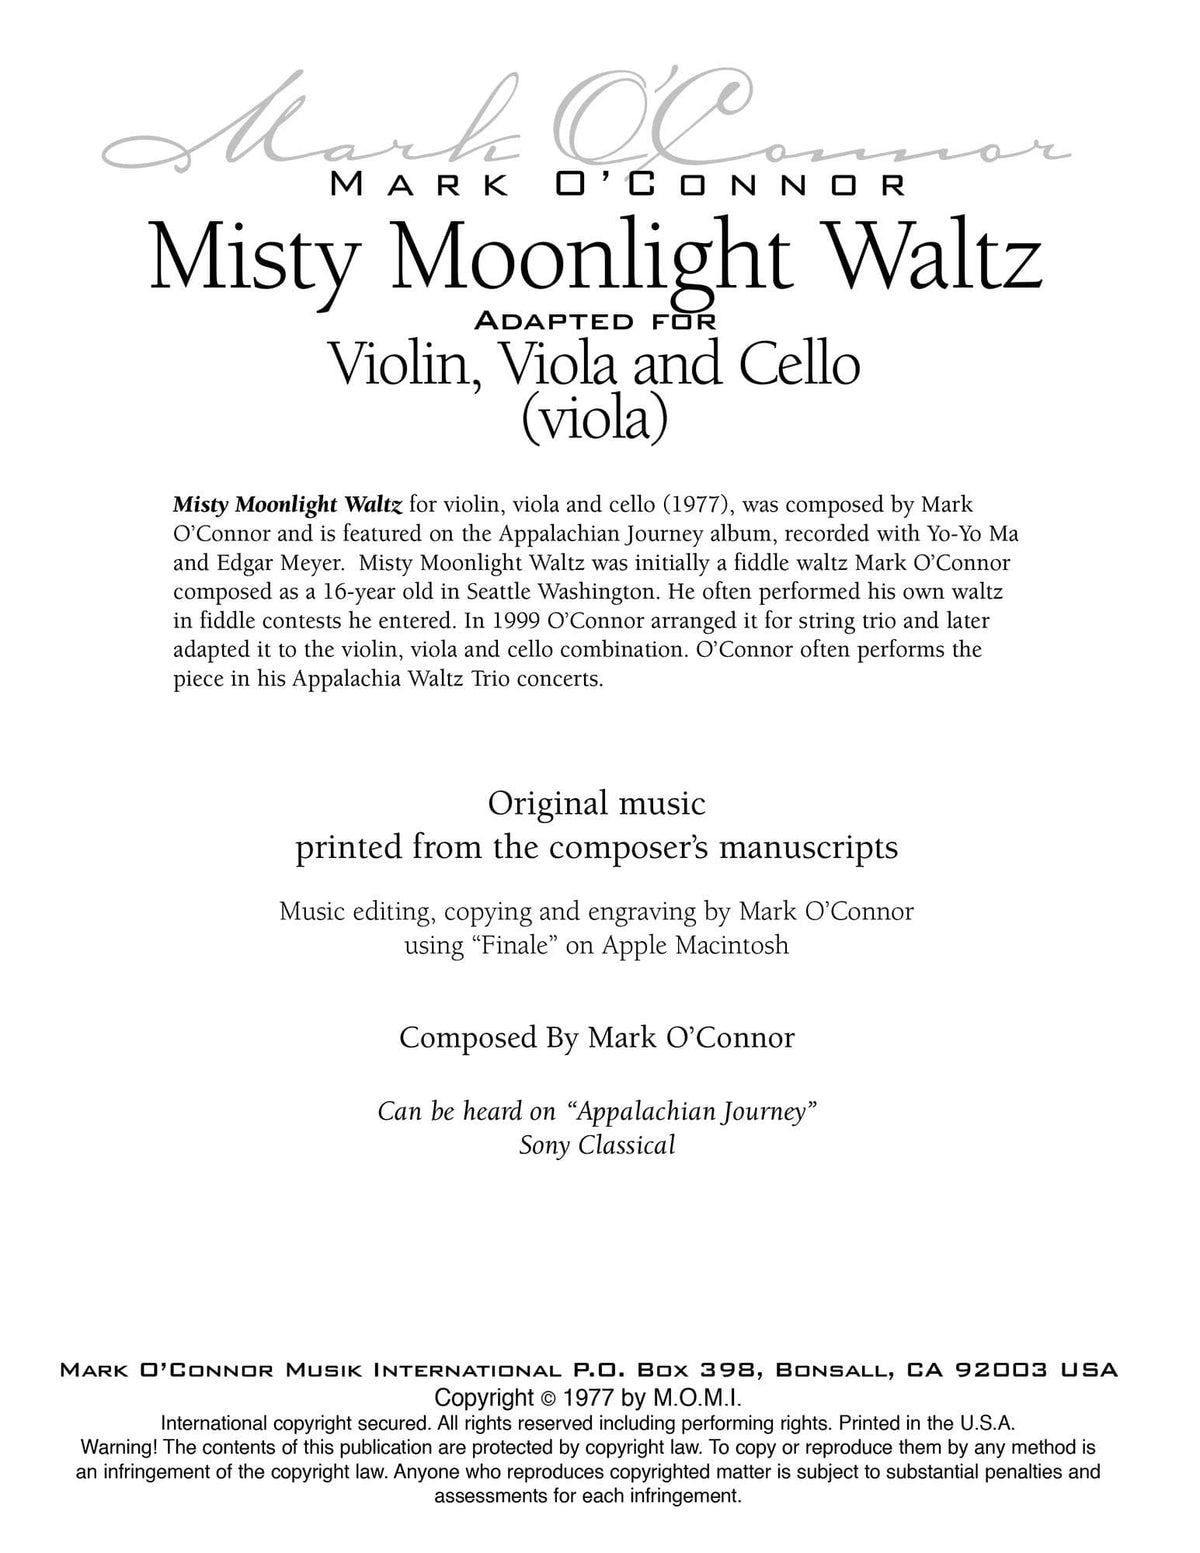 O'Connor, Mark - Misty Moonlight Waltz for Violin, Viola, and Cello - Viola - Digital Download